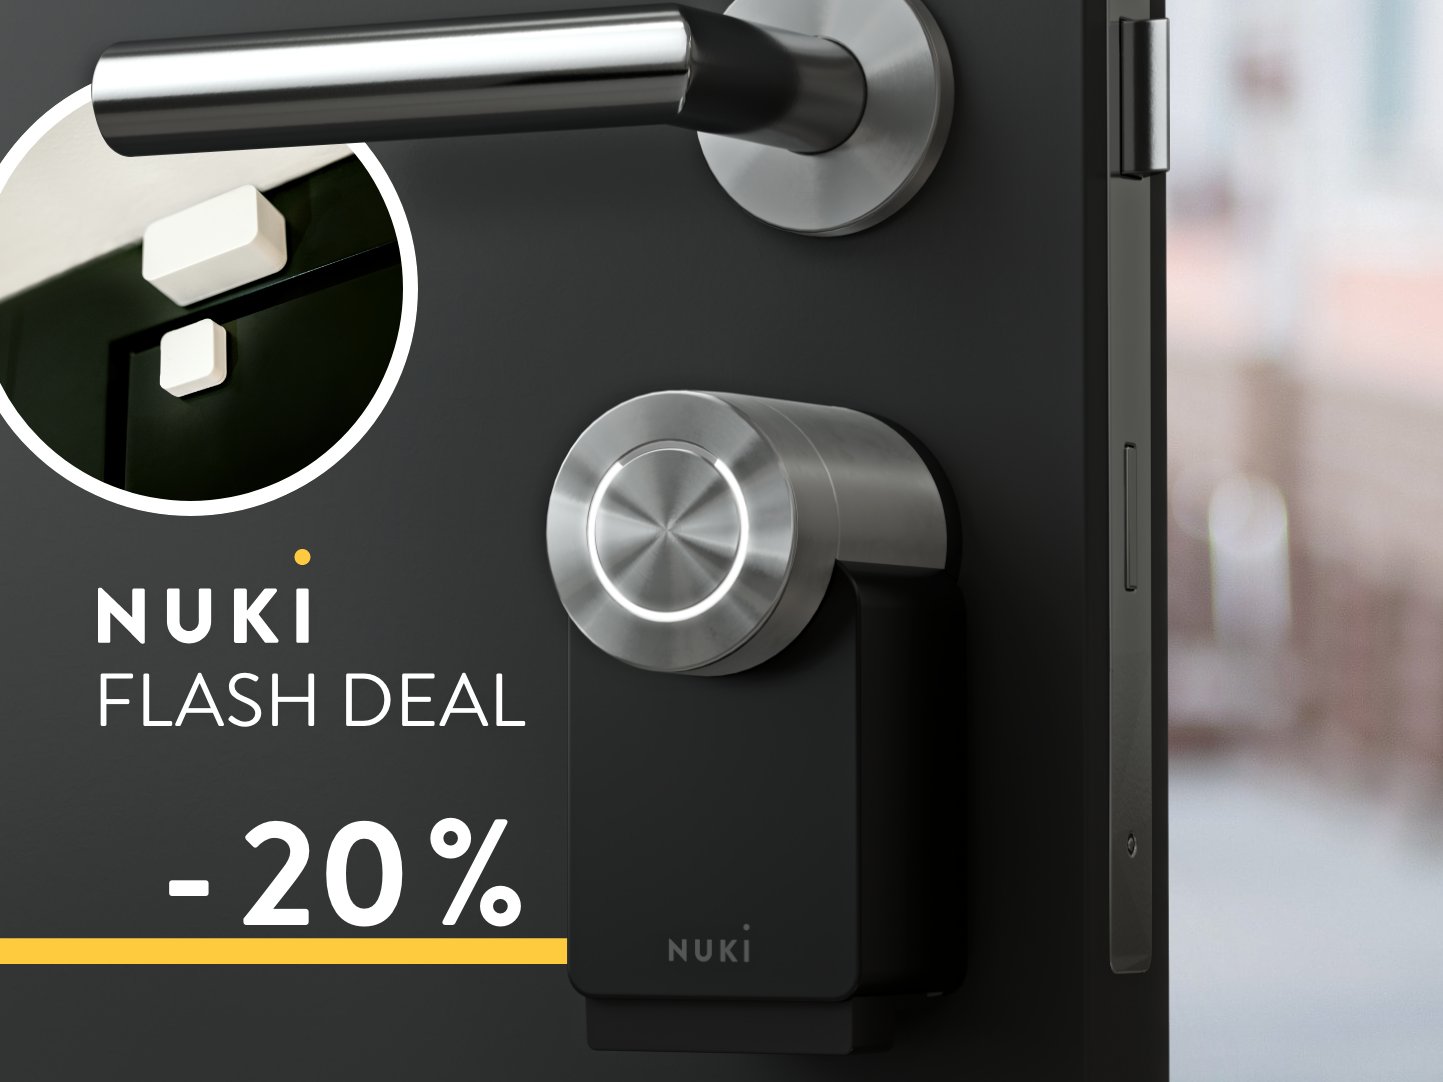 Nuki smart lock 3.0 & 3.0 Pro compared ! With €30,- discount